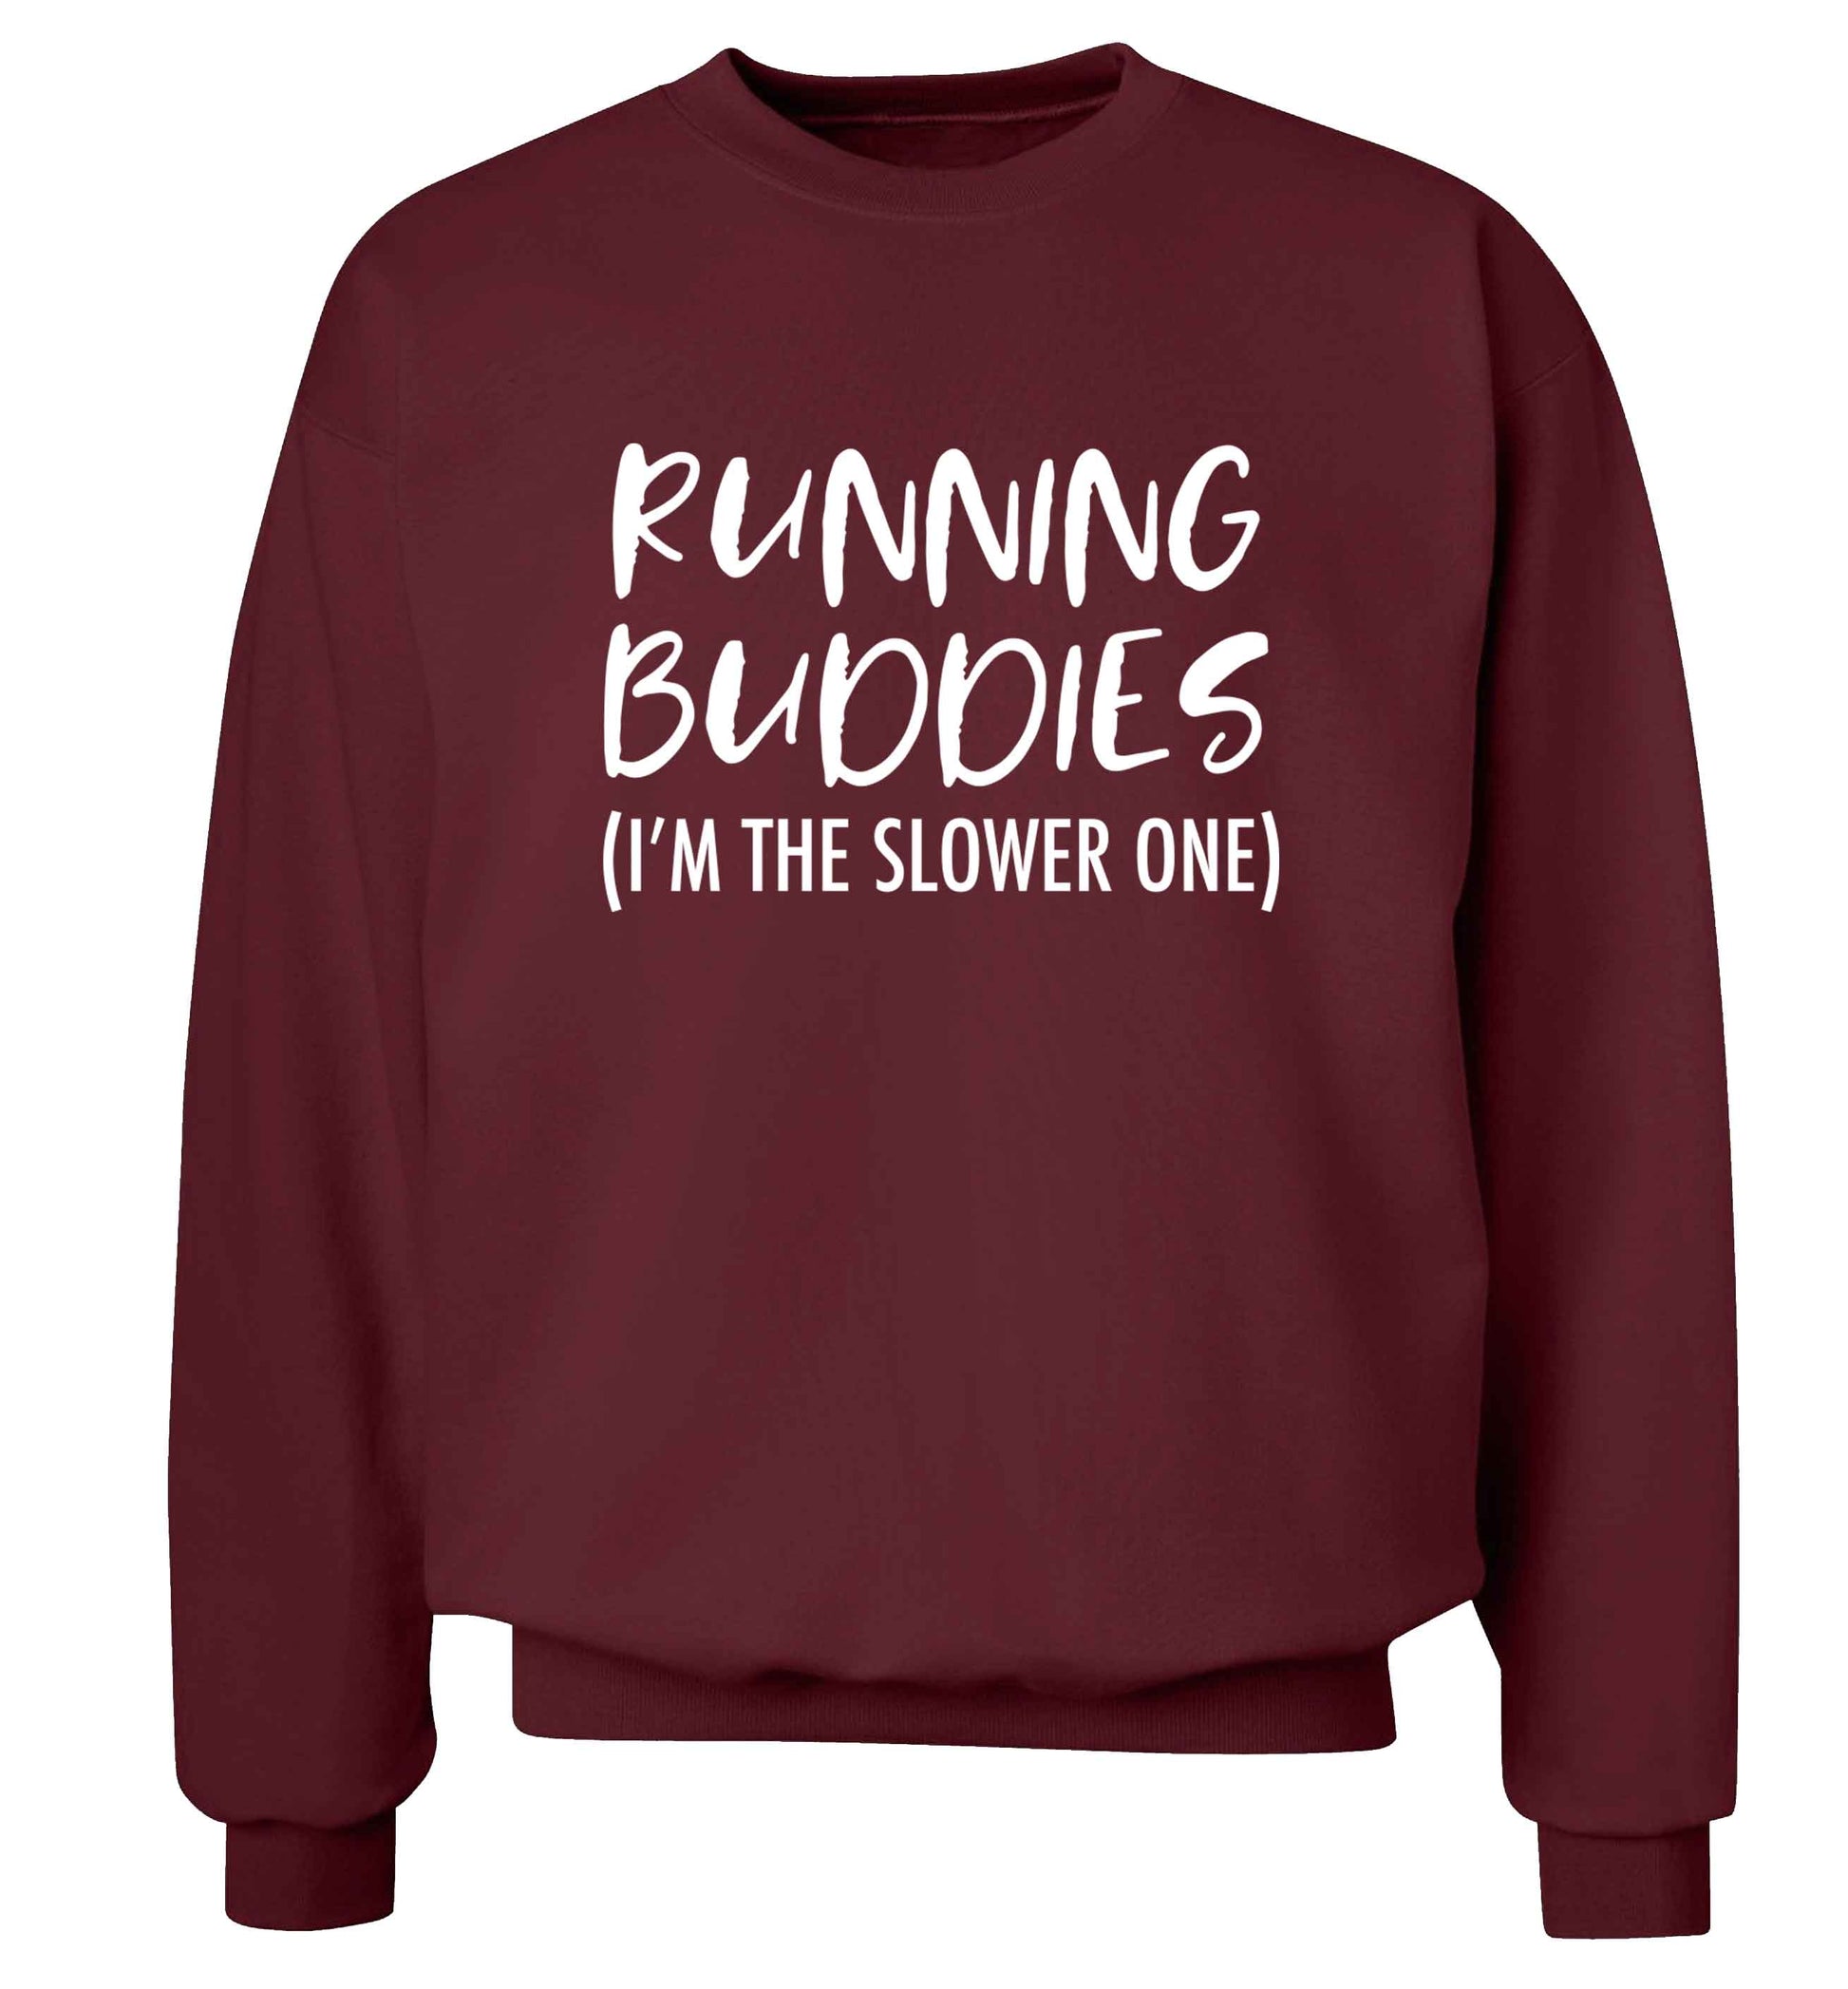 Running buddies (I'm the slower one) adult's unisex maroon sweater 2XL